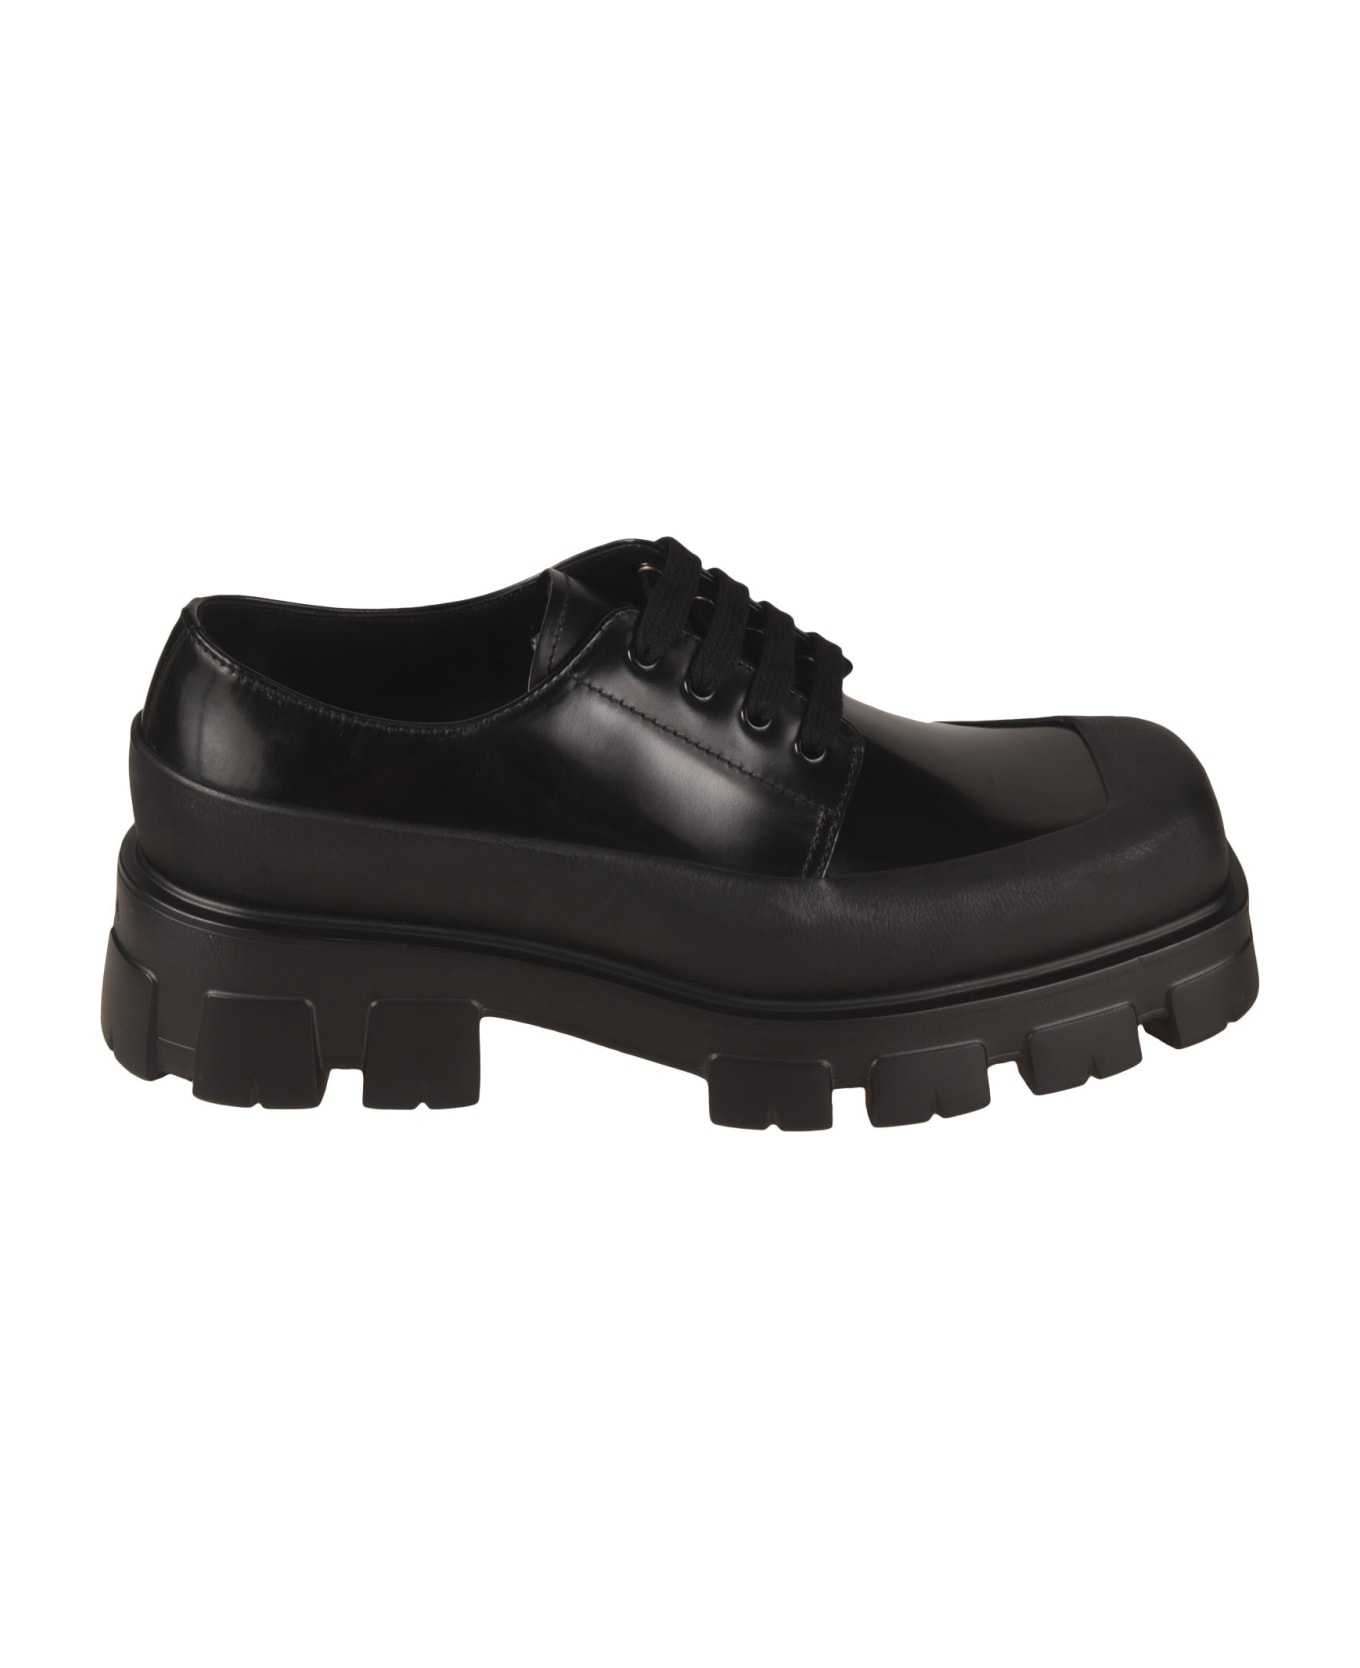 Prada Square Tote Derby Shoes - Black